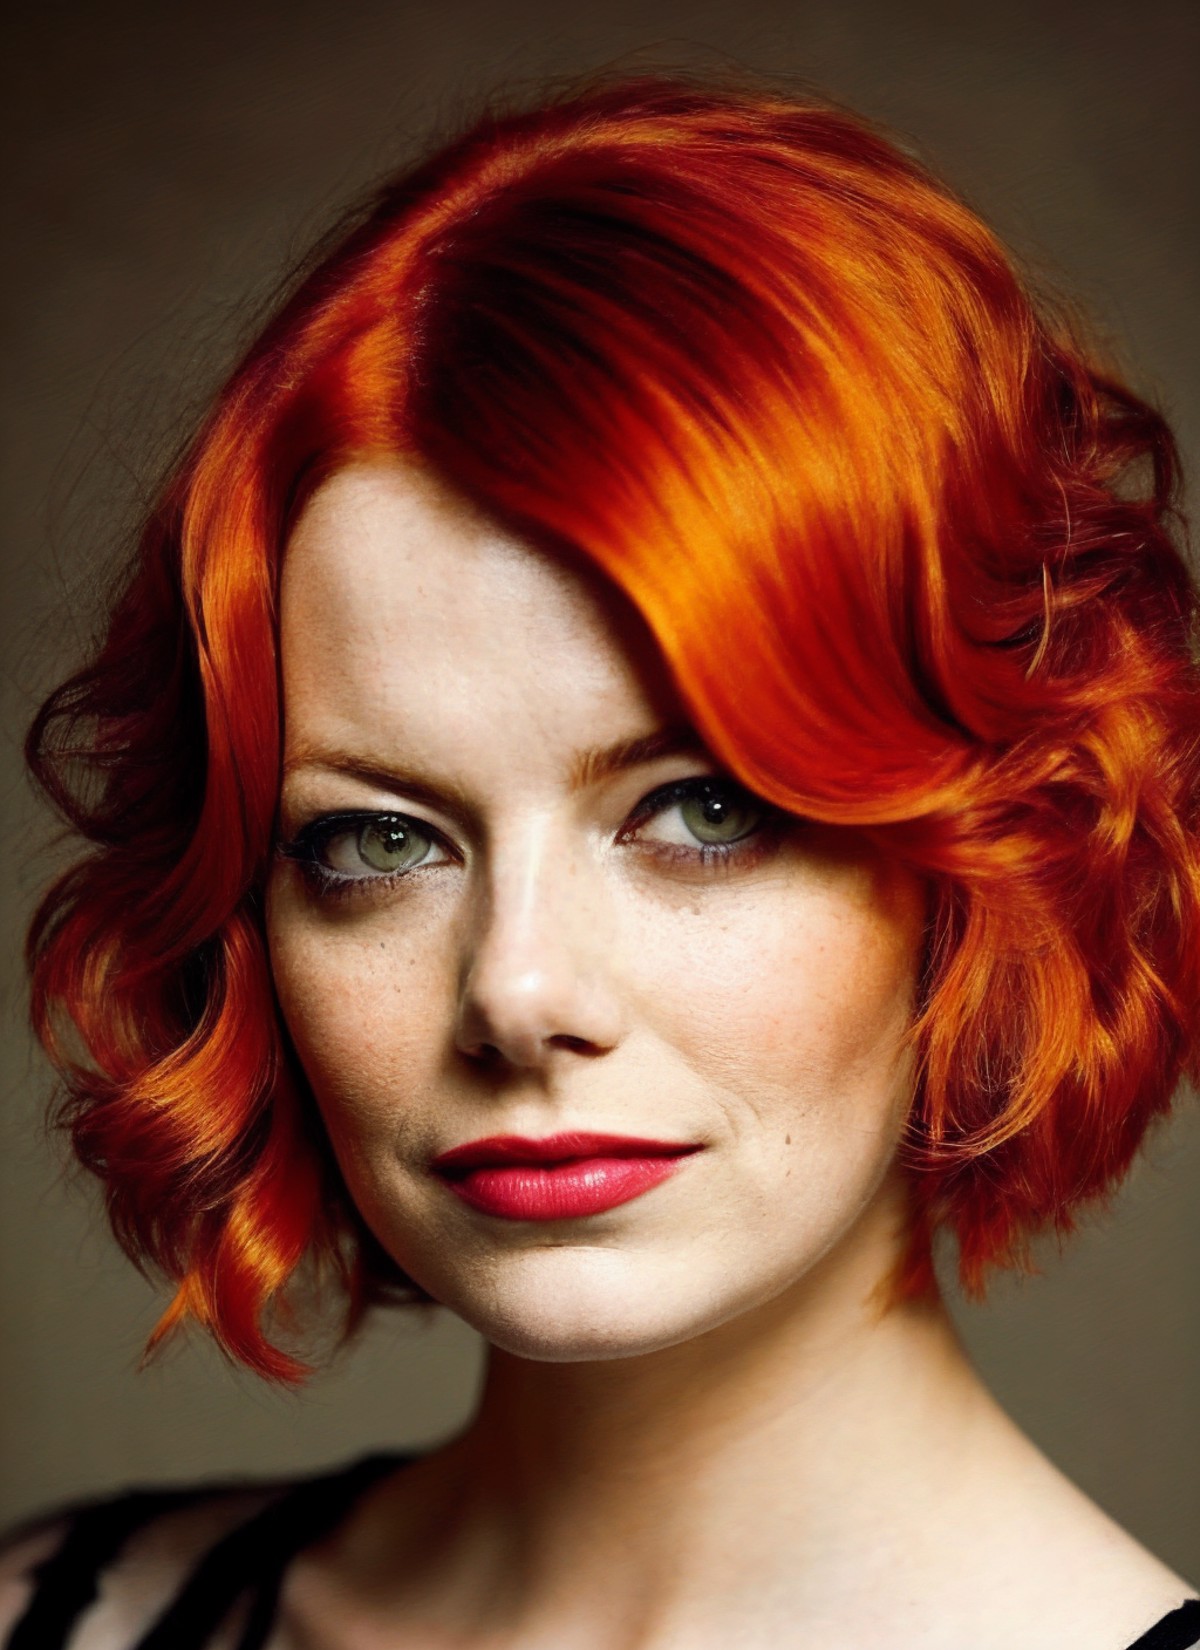 analog style, modelshoot style, portrait of sks woman by Flora Borsi, style by Flora Borsi, bold, bright colours, orange M...